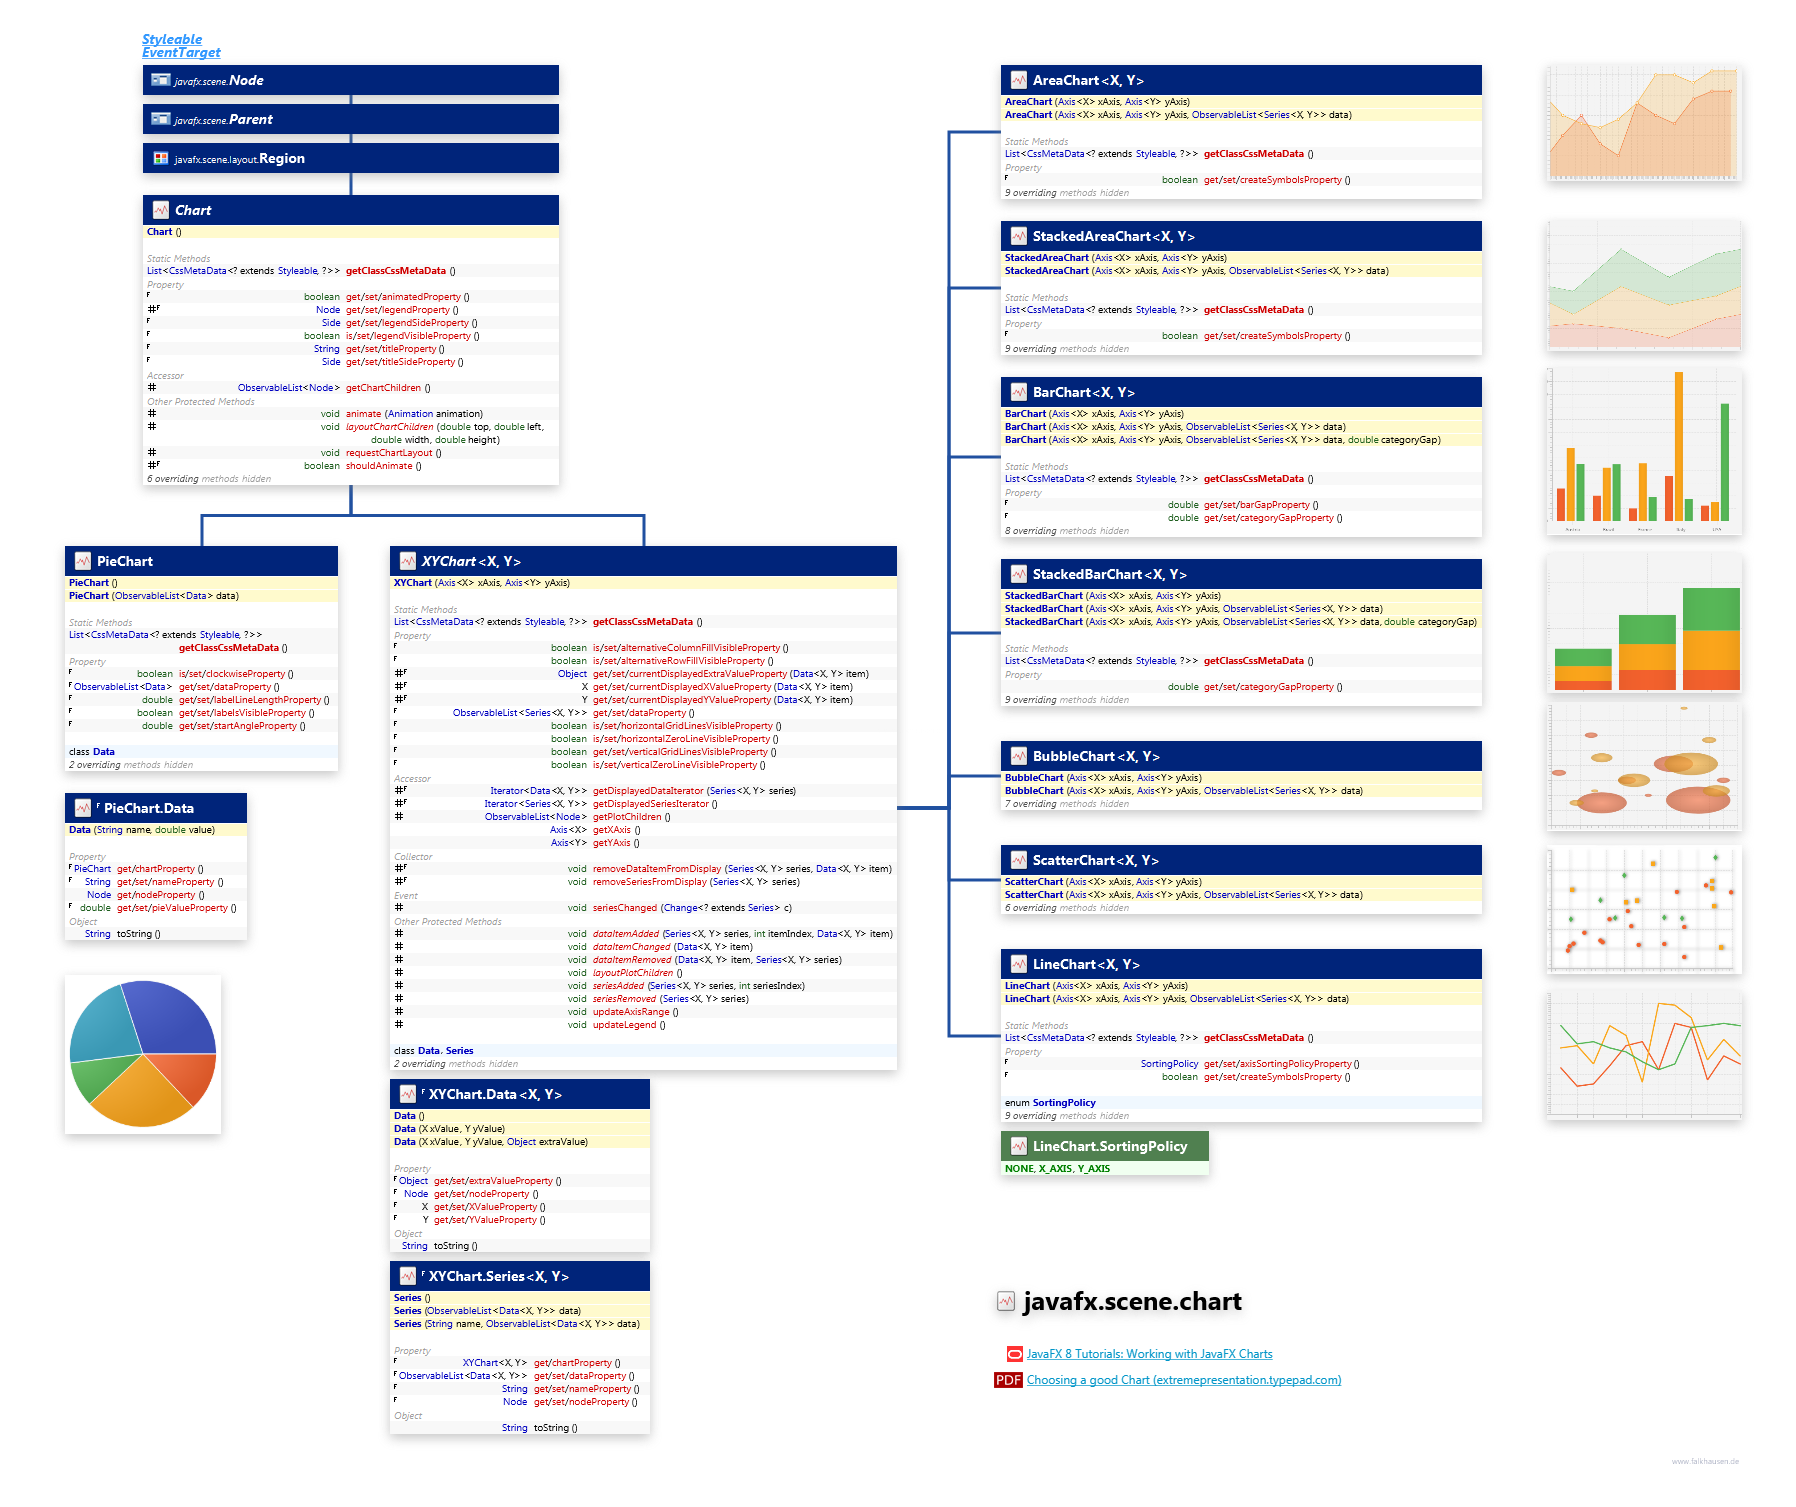 javafx.scene.chart Chart class diagram and api documentation for JavaFX 10